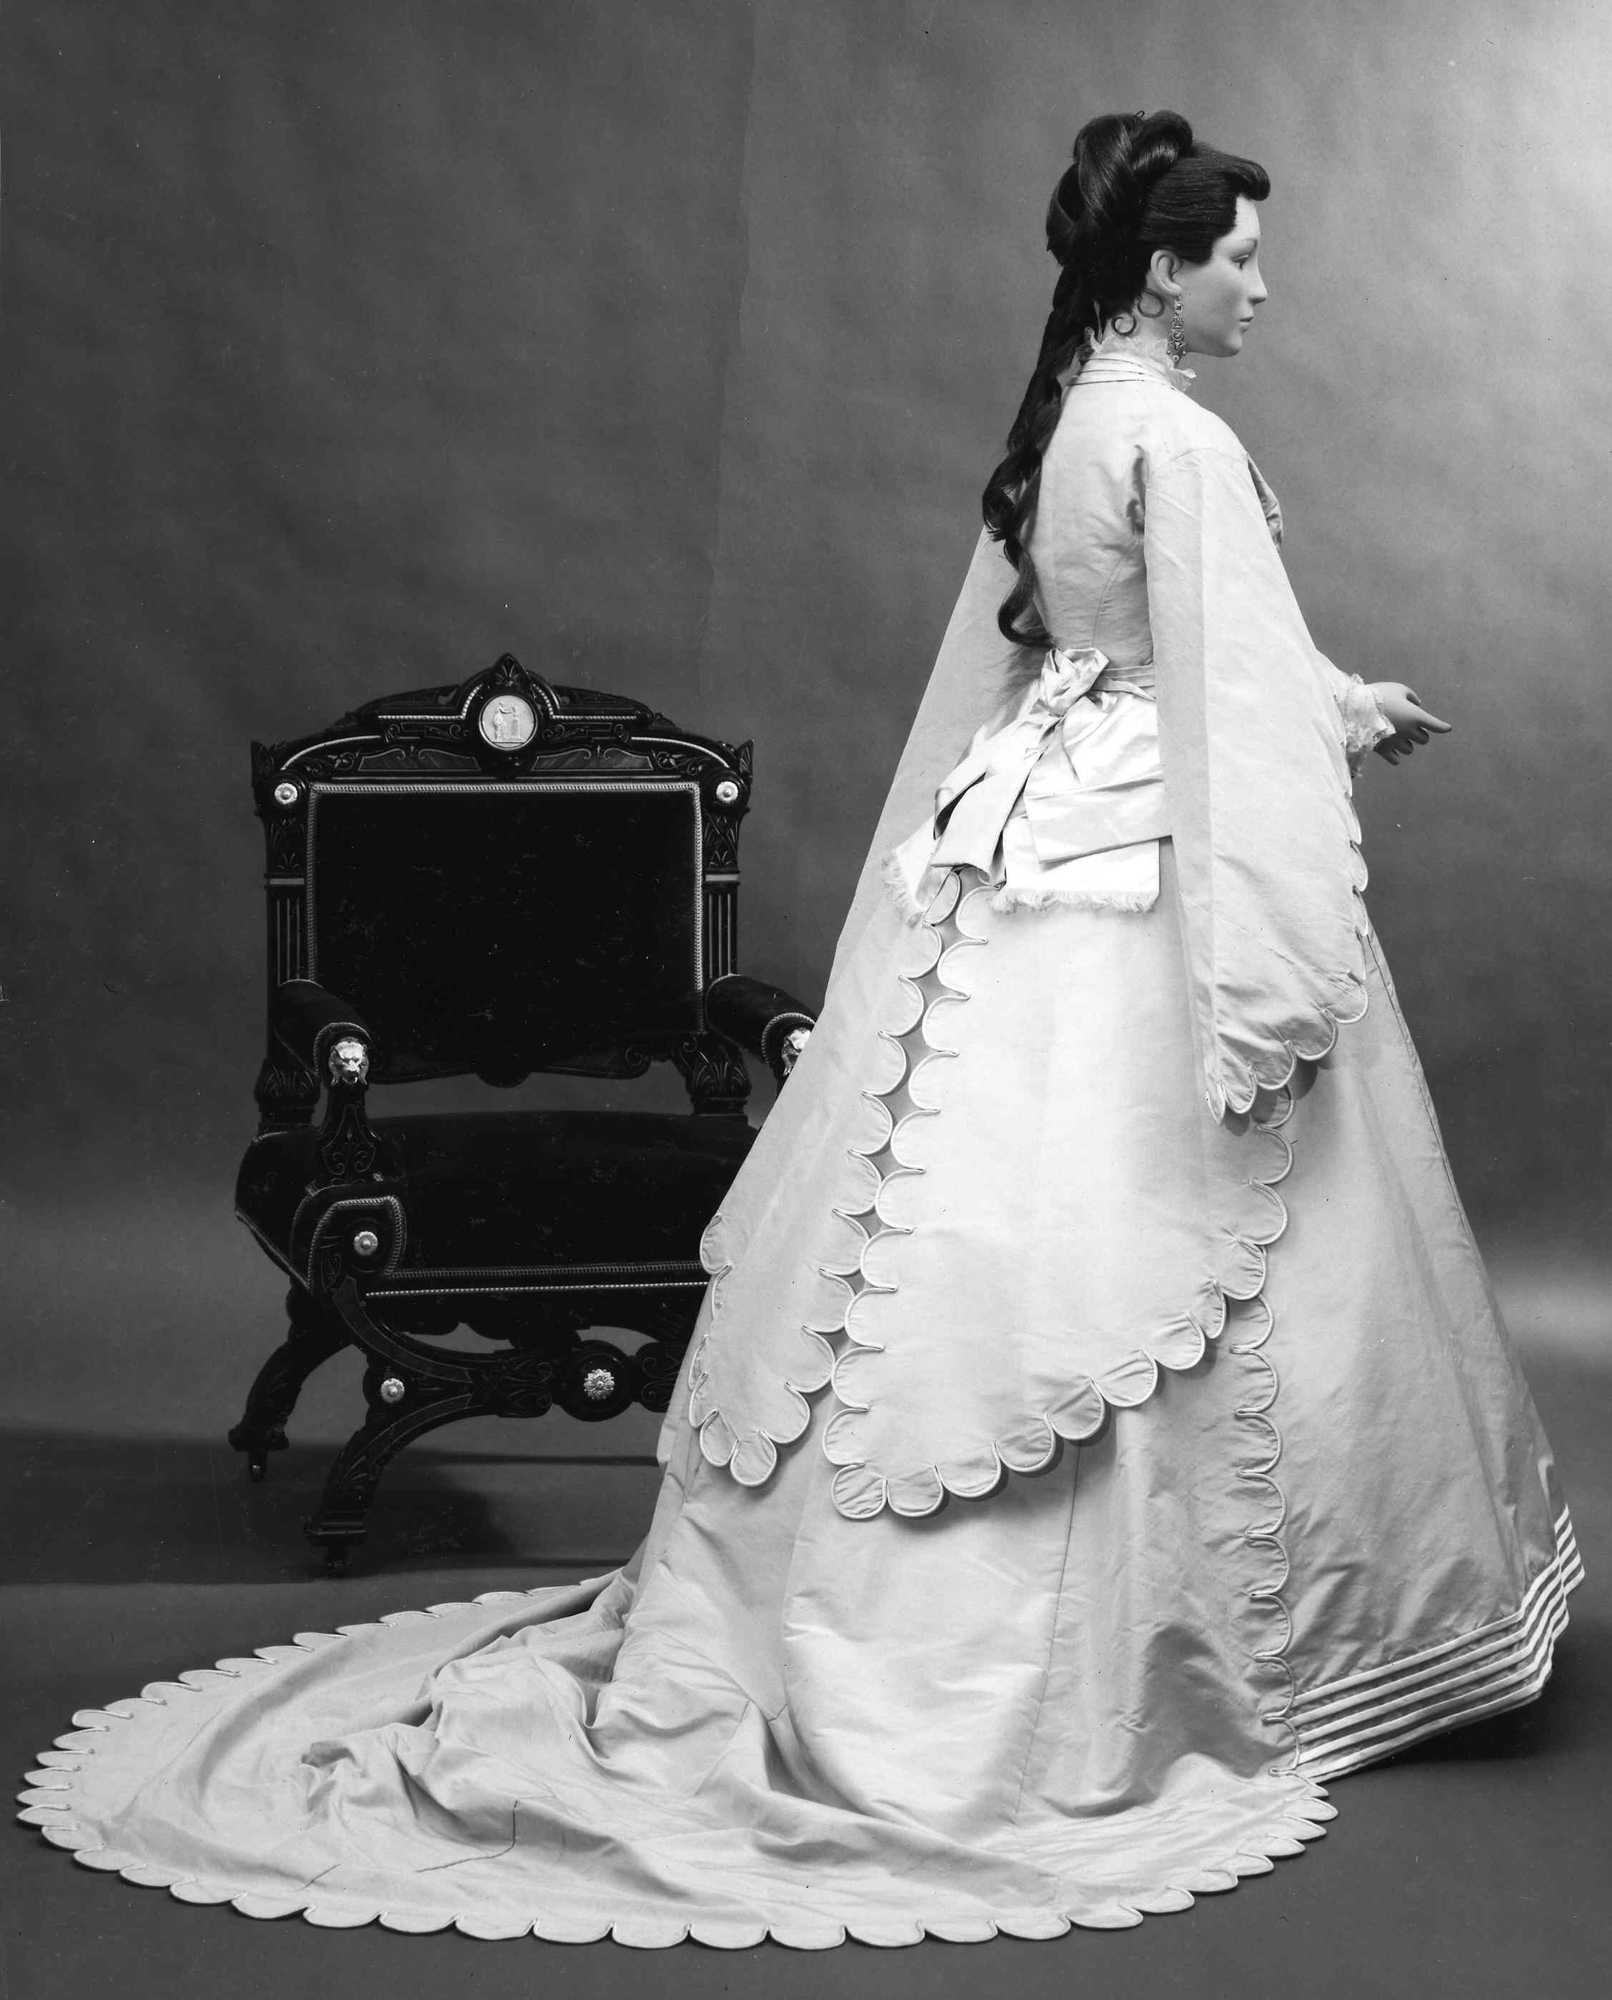 Fashionable 1870 wedding dress by trailing fabric design